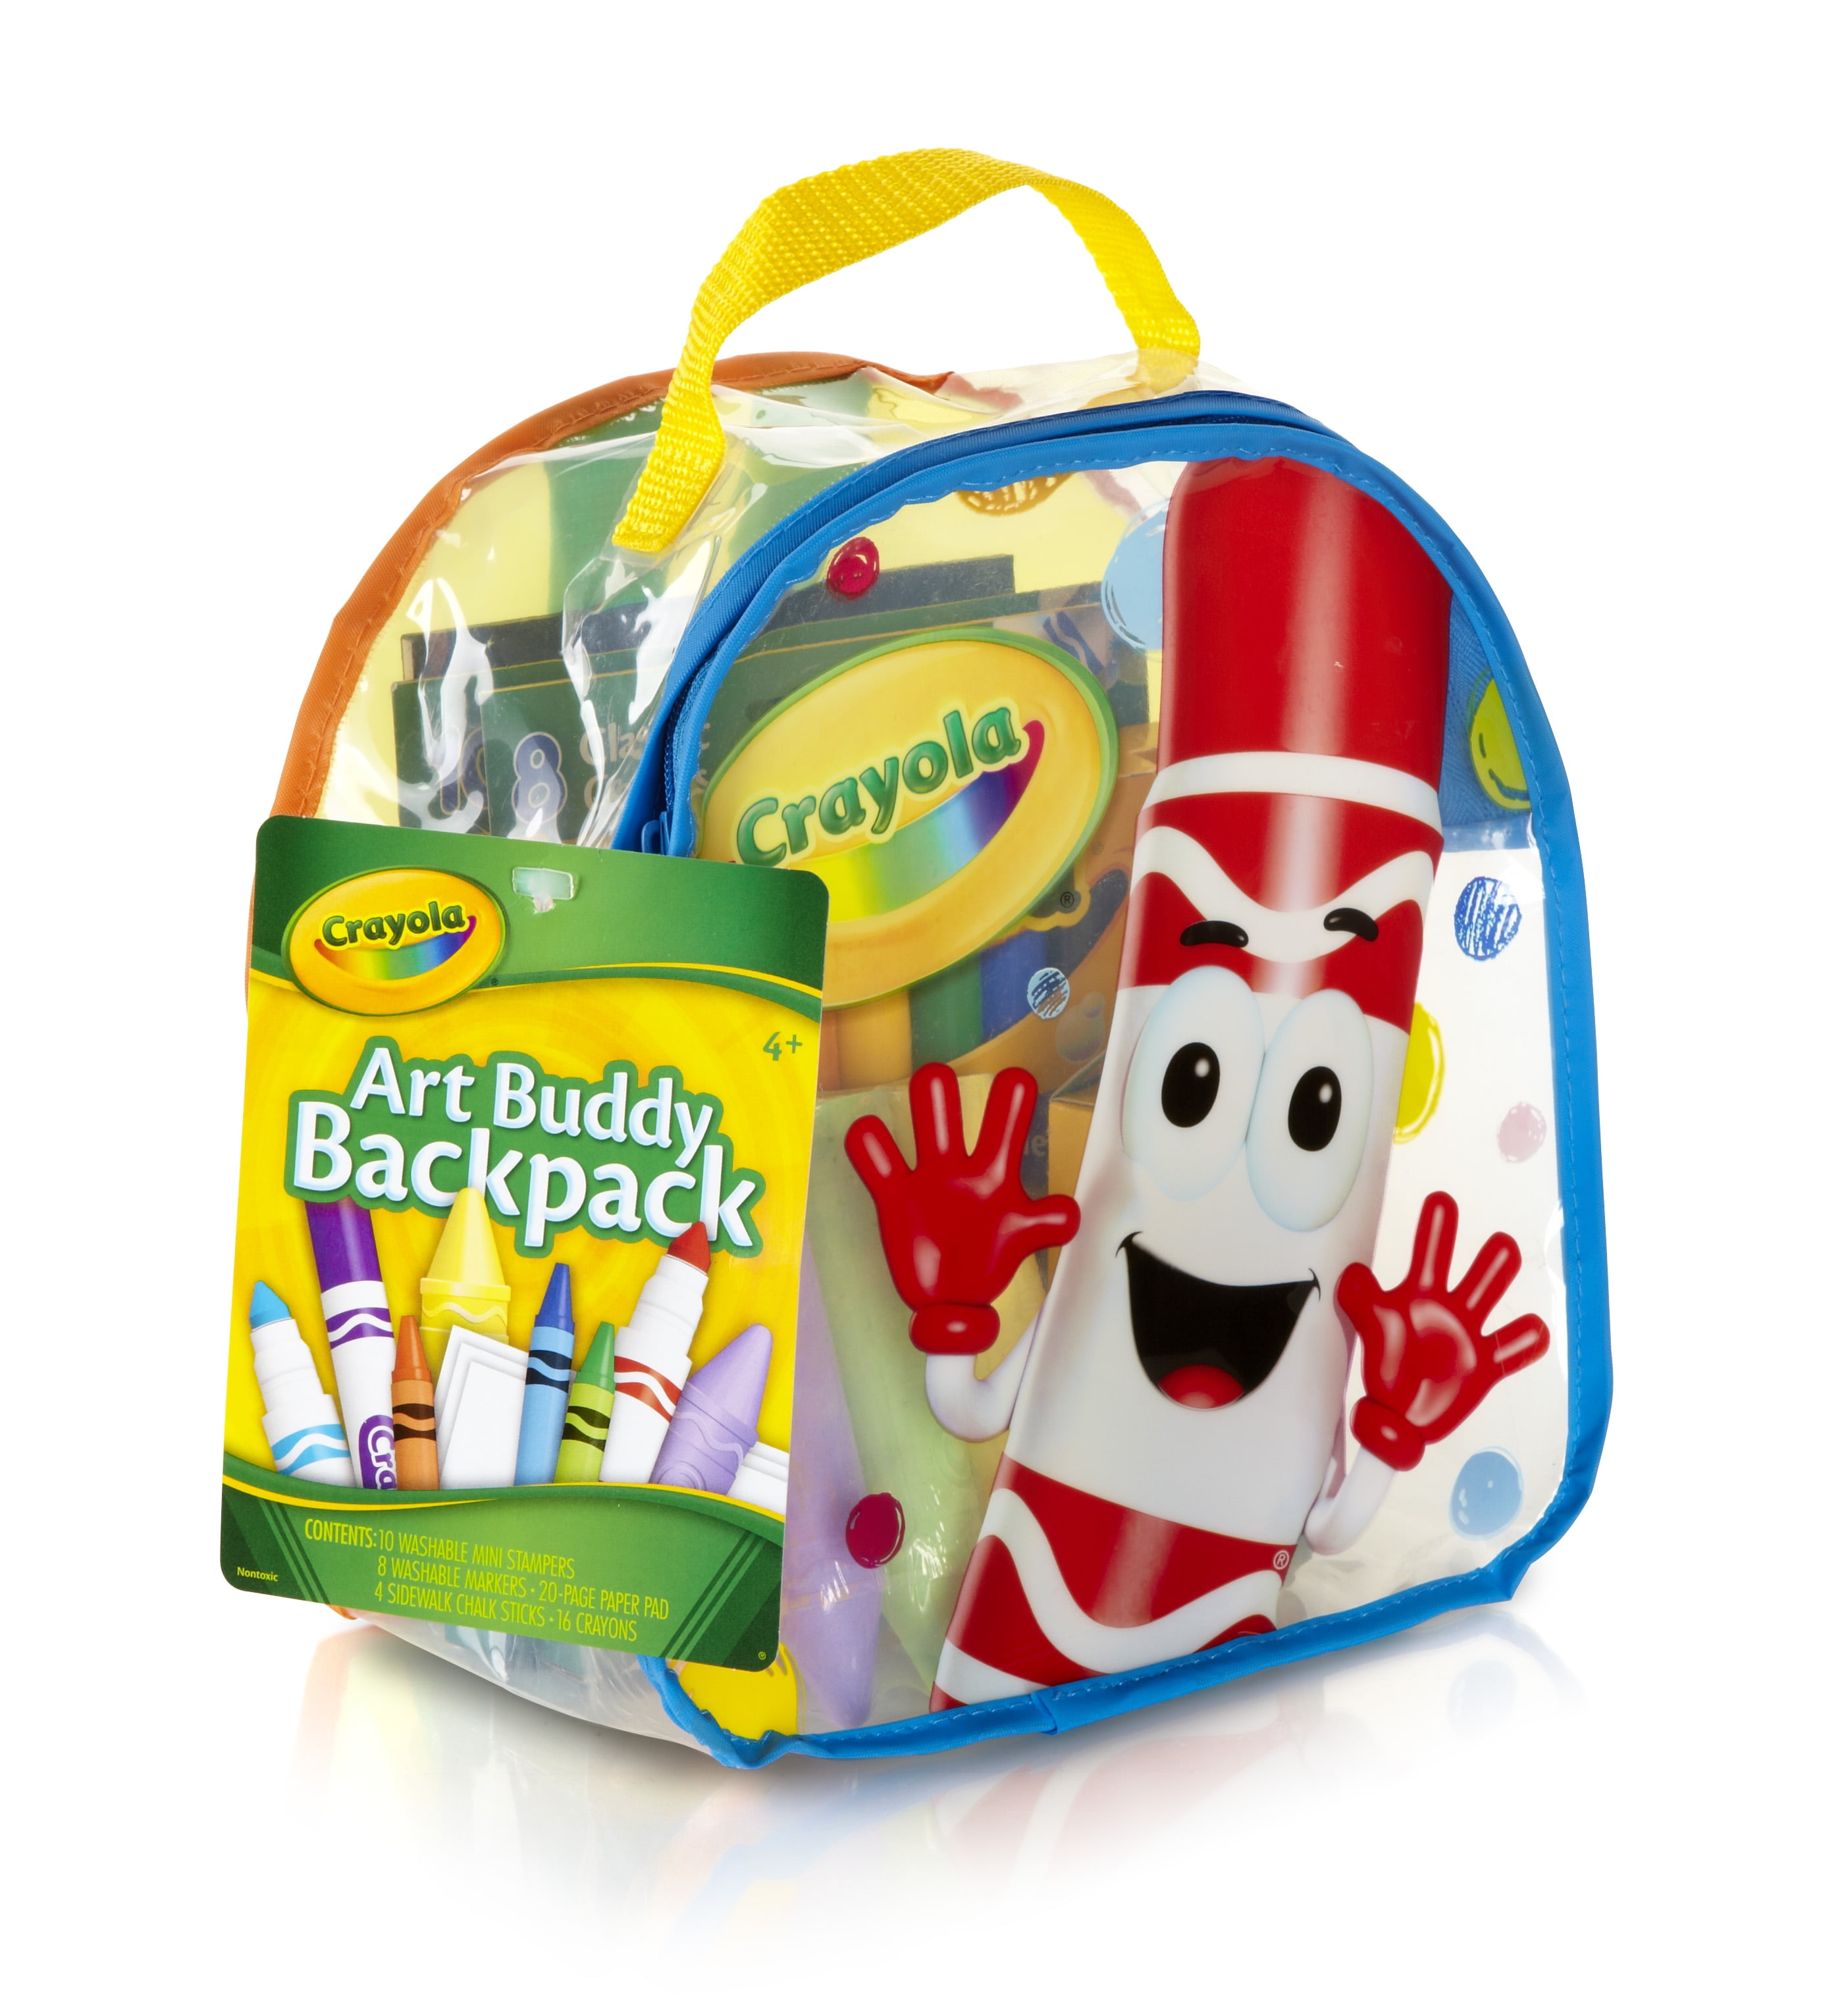 Crayola Boys Gaming Backpack DIY Backpack with Crayola Markers 16 inch 